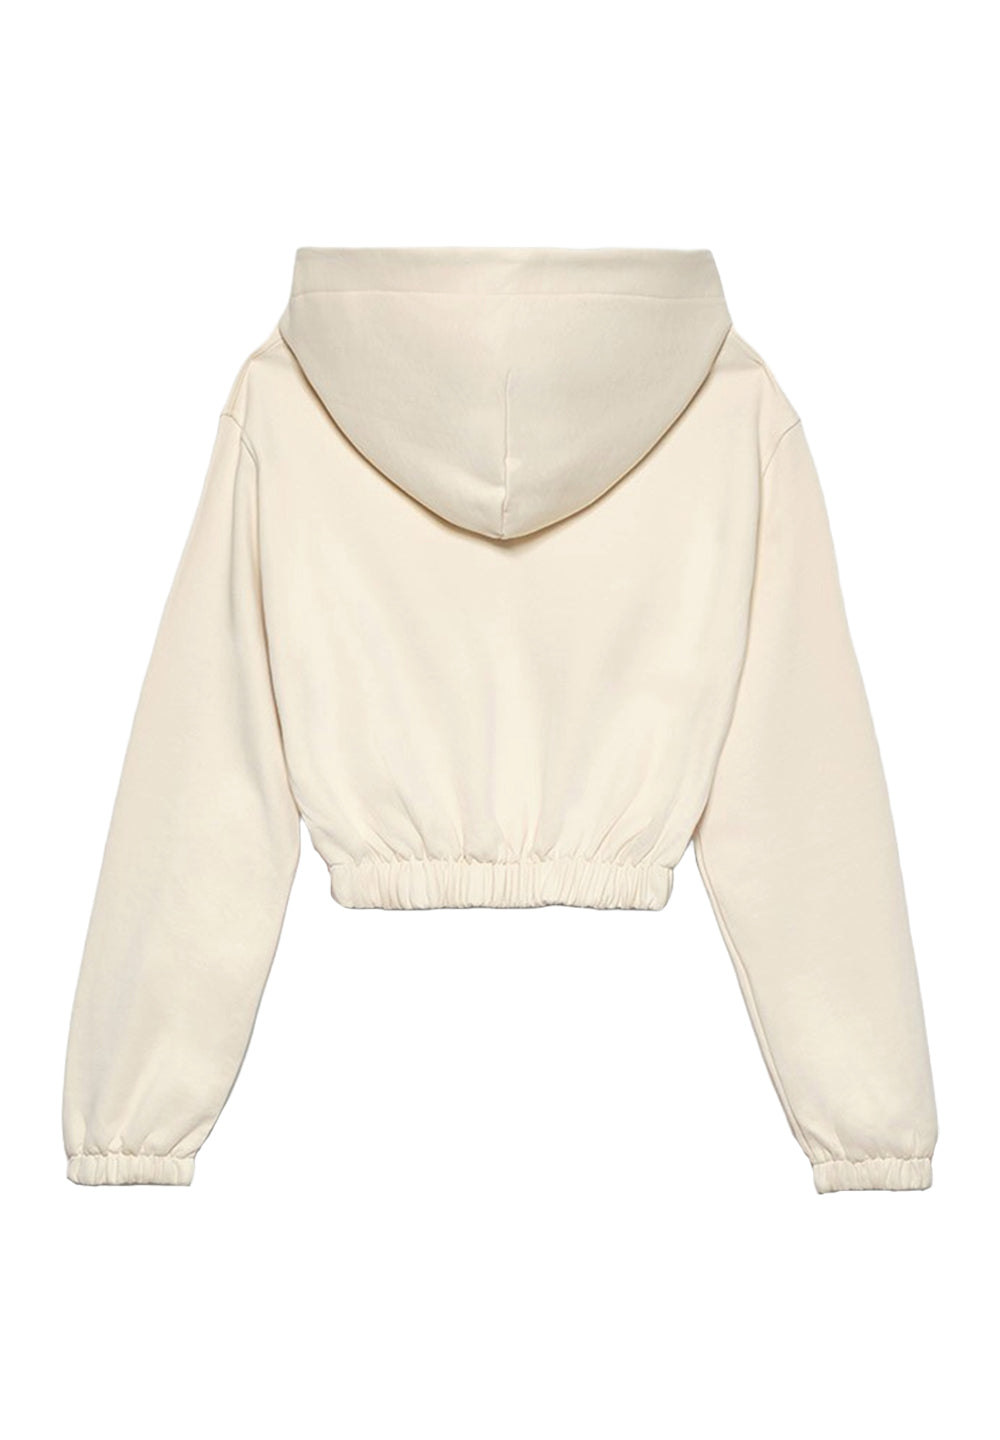 Cream hooded sweatshirt for girls